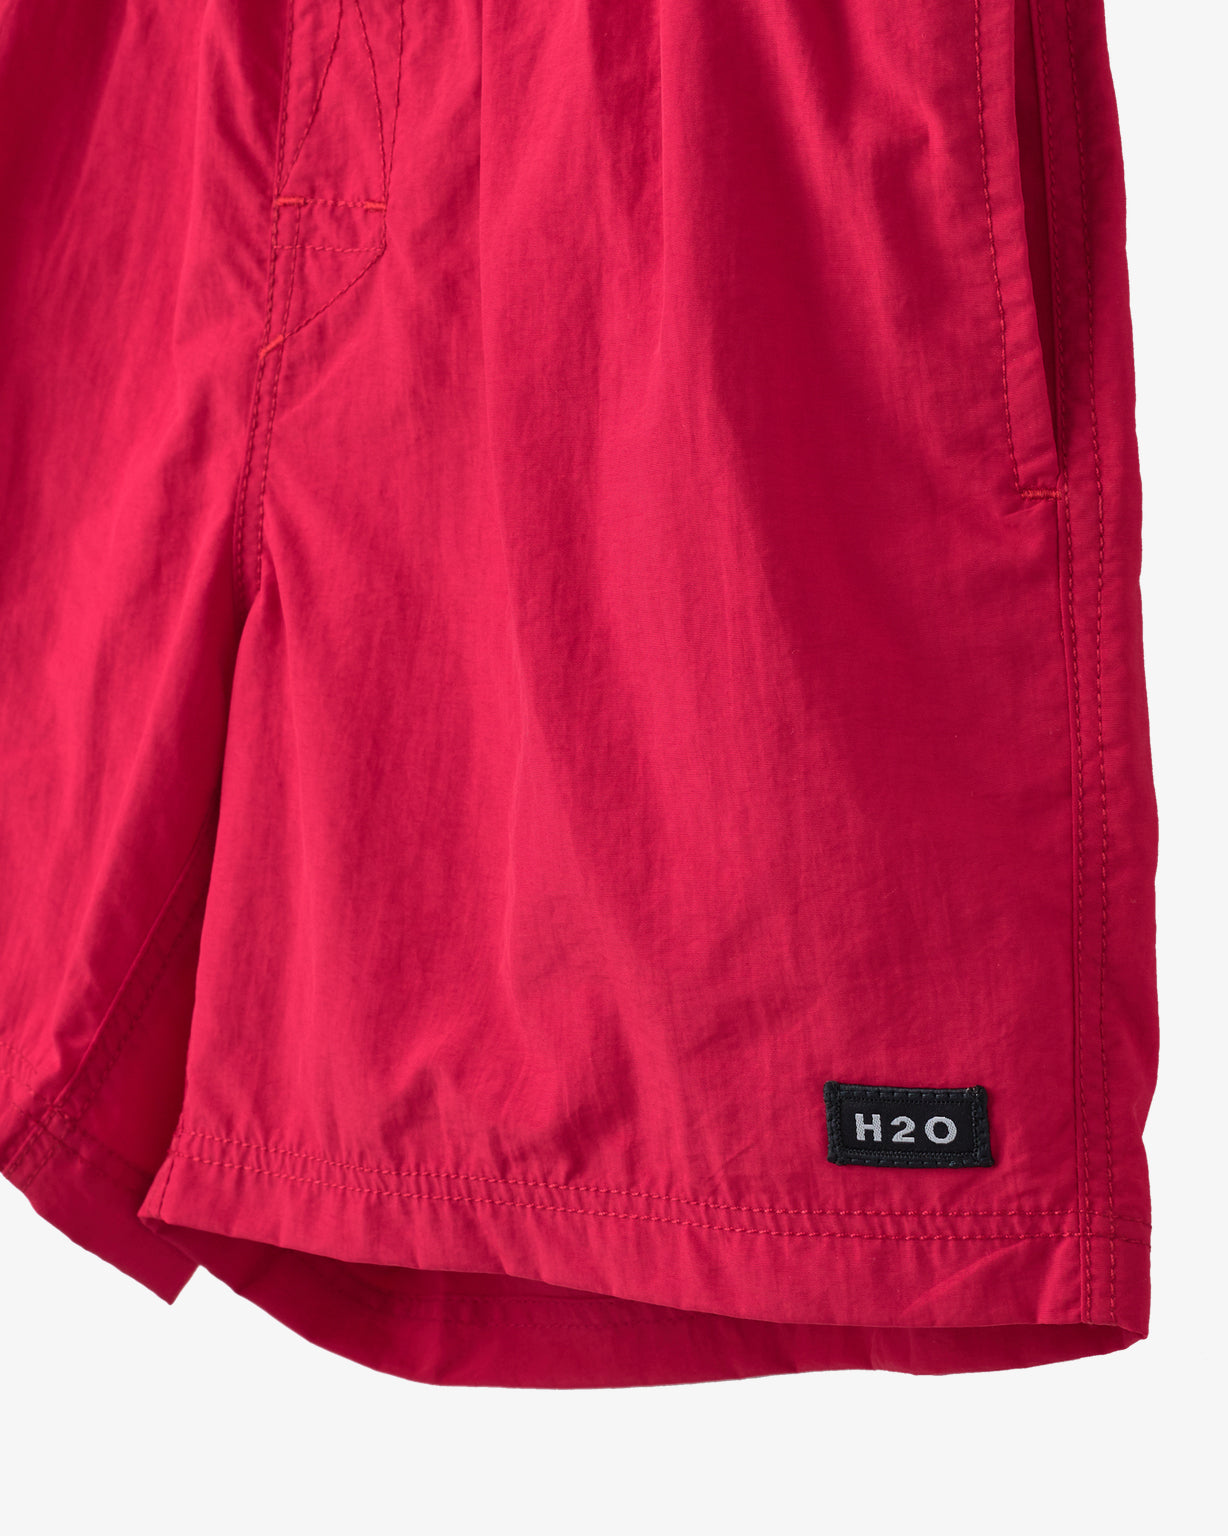 H2O Basic Leisure Badeshorts Shorts 2000 Red